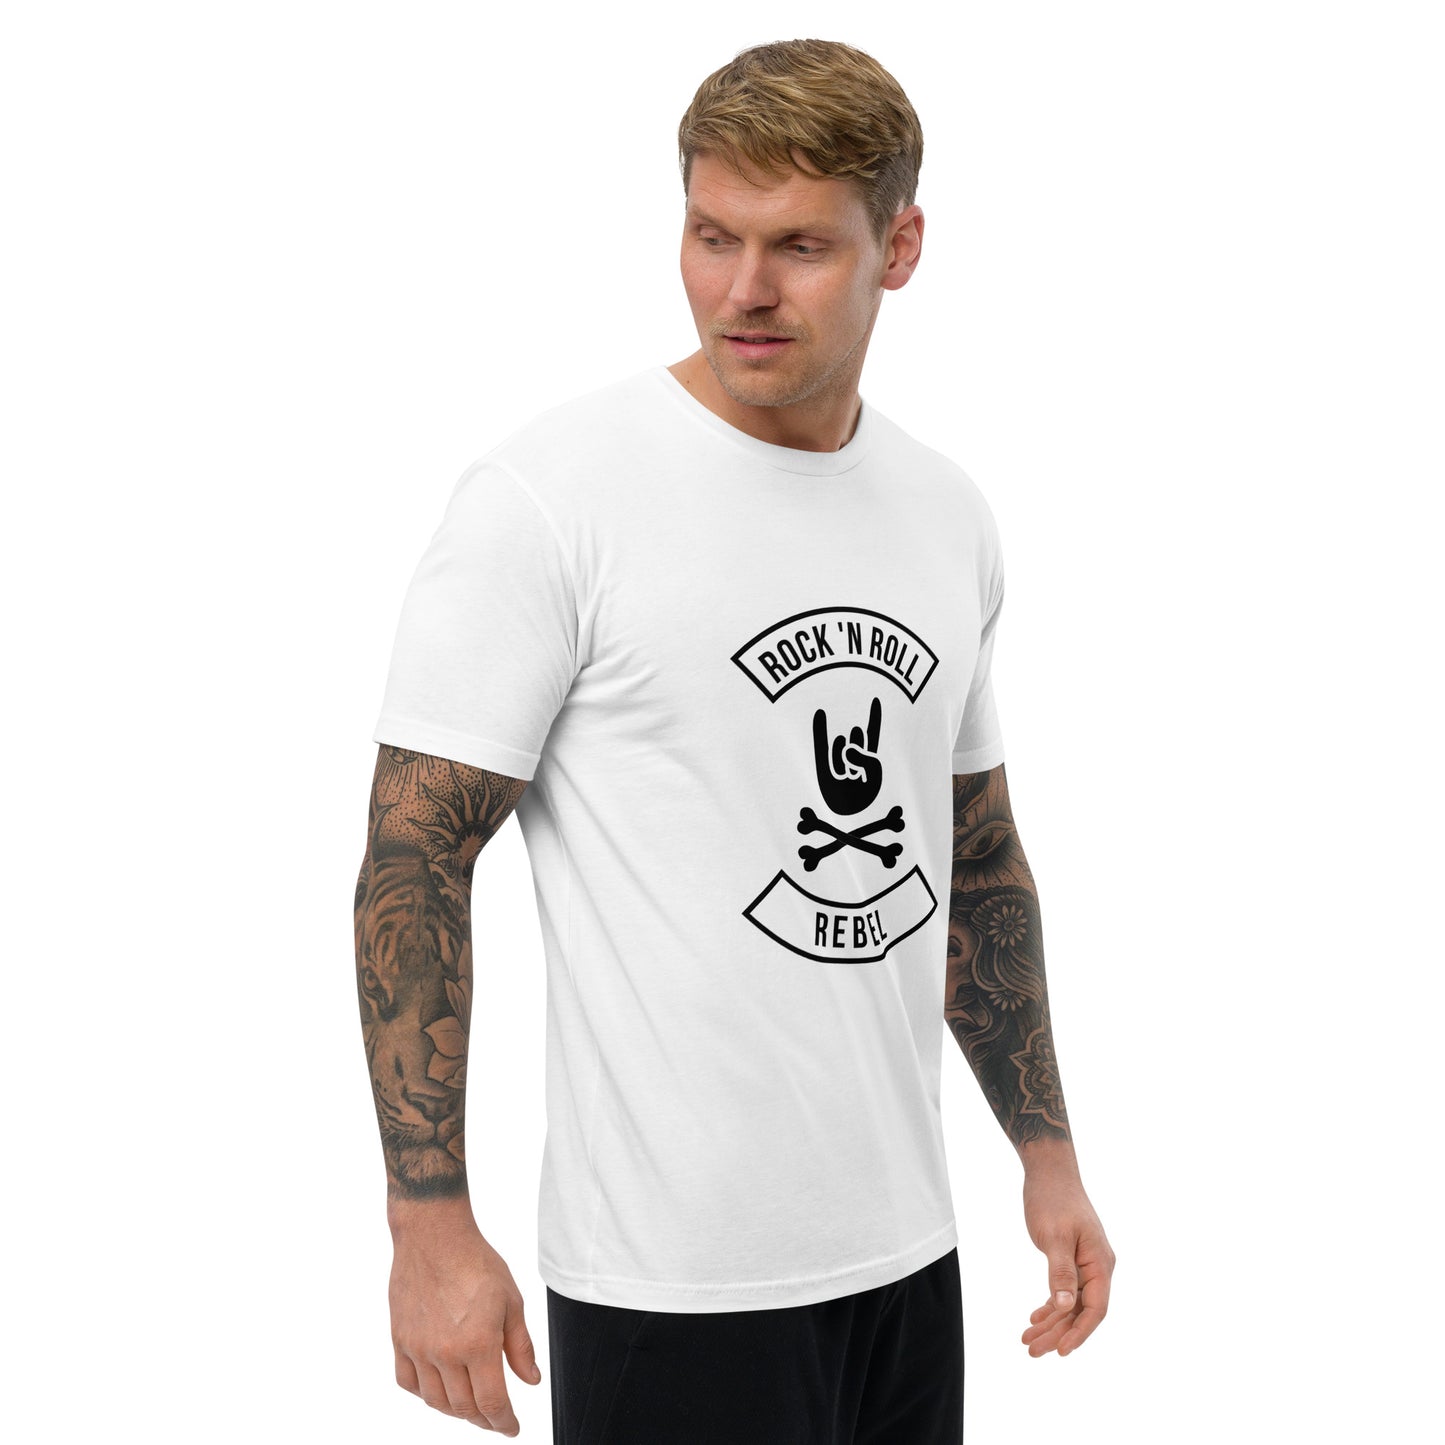 ROCKNROLL REBEL Men Fitted White T-shirt